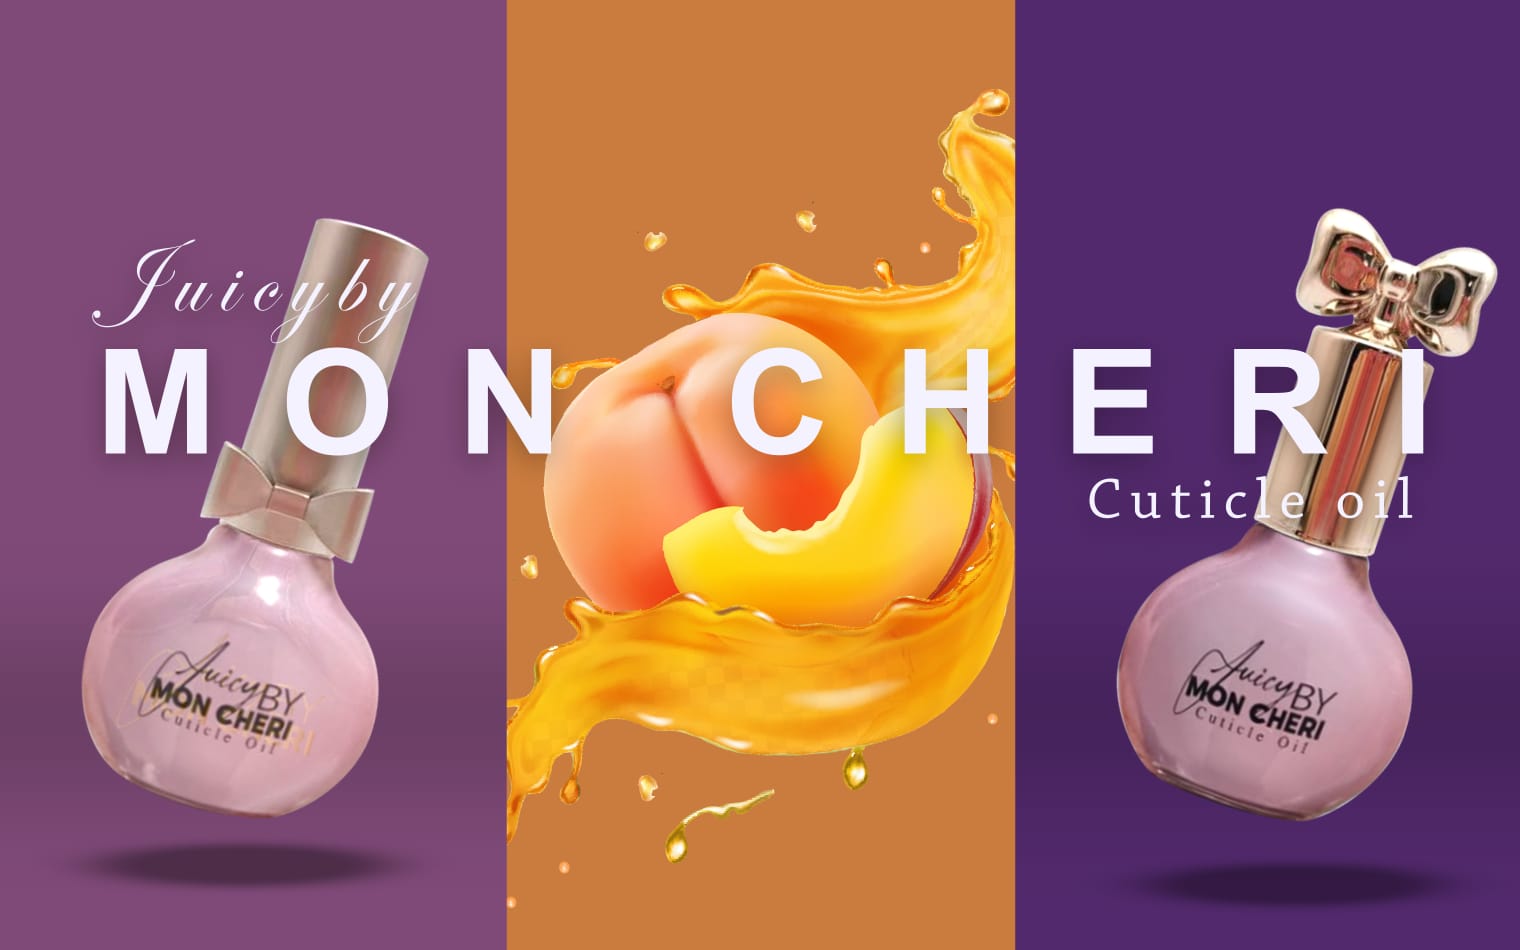 Peachy Nails: Juicy by Mon Cheri Cuticle Oil